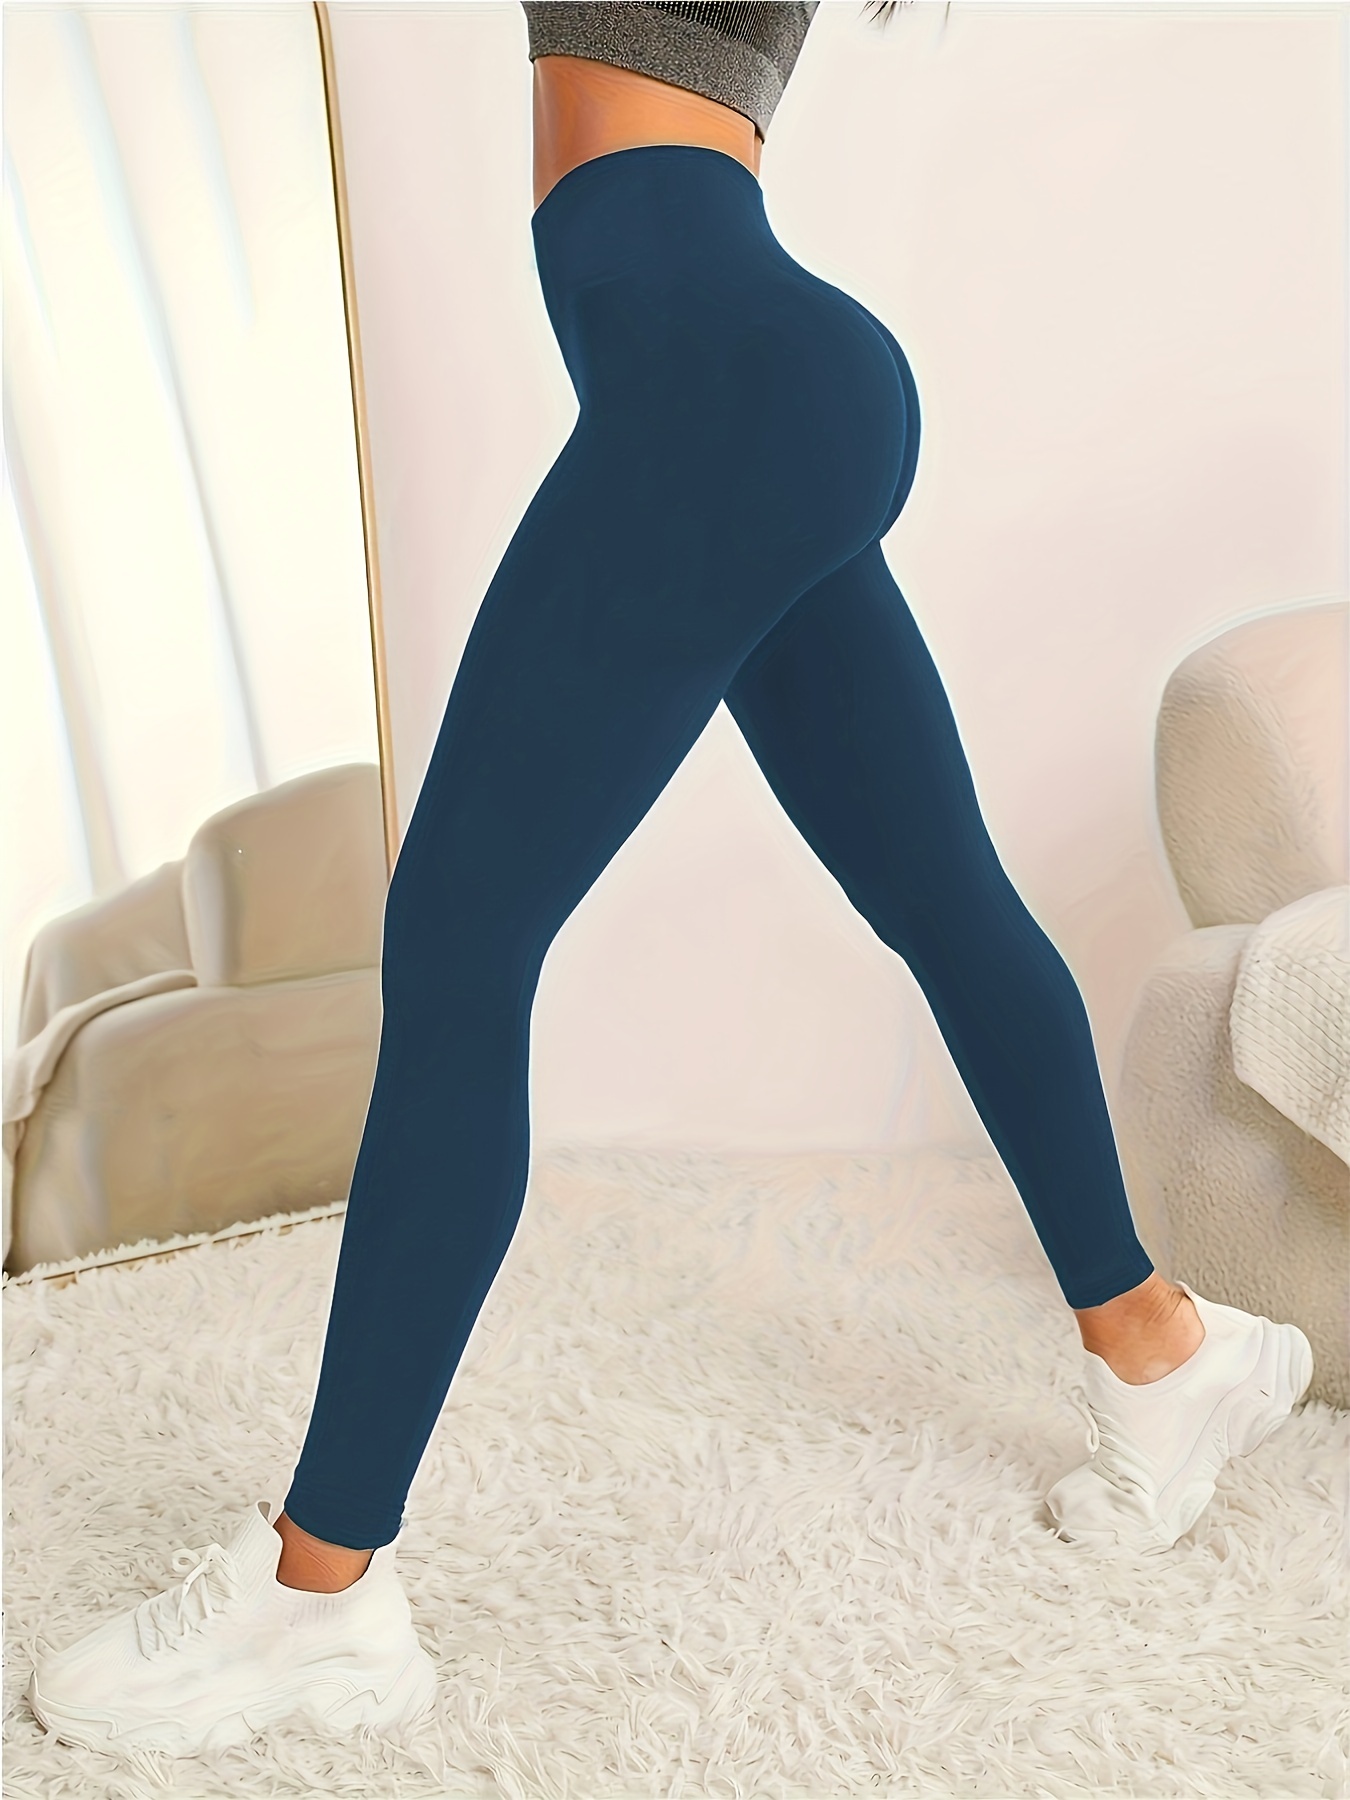 MANIFIQUE Leggins Pantalones Deportivos Mujer Yoga Cintura Alta